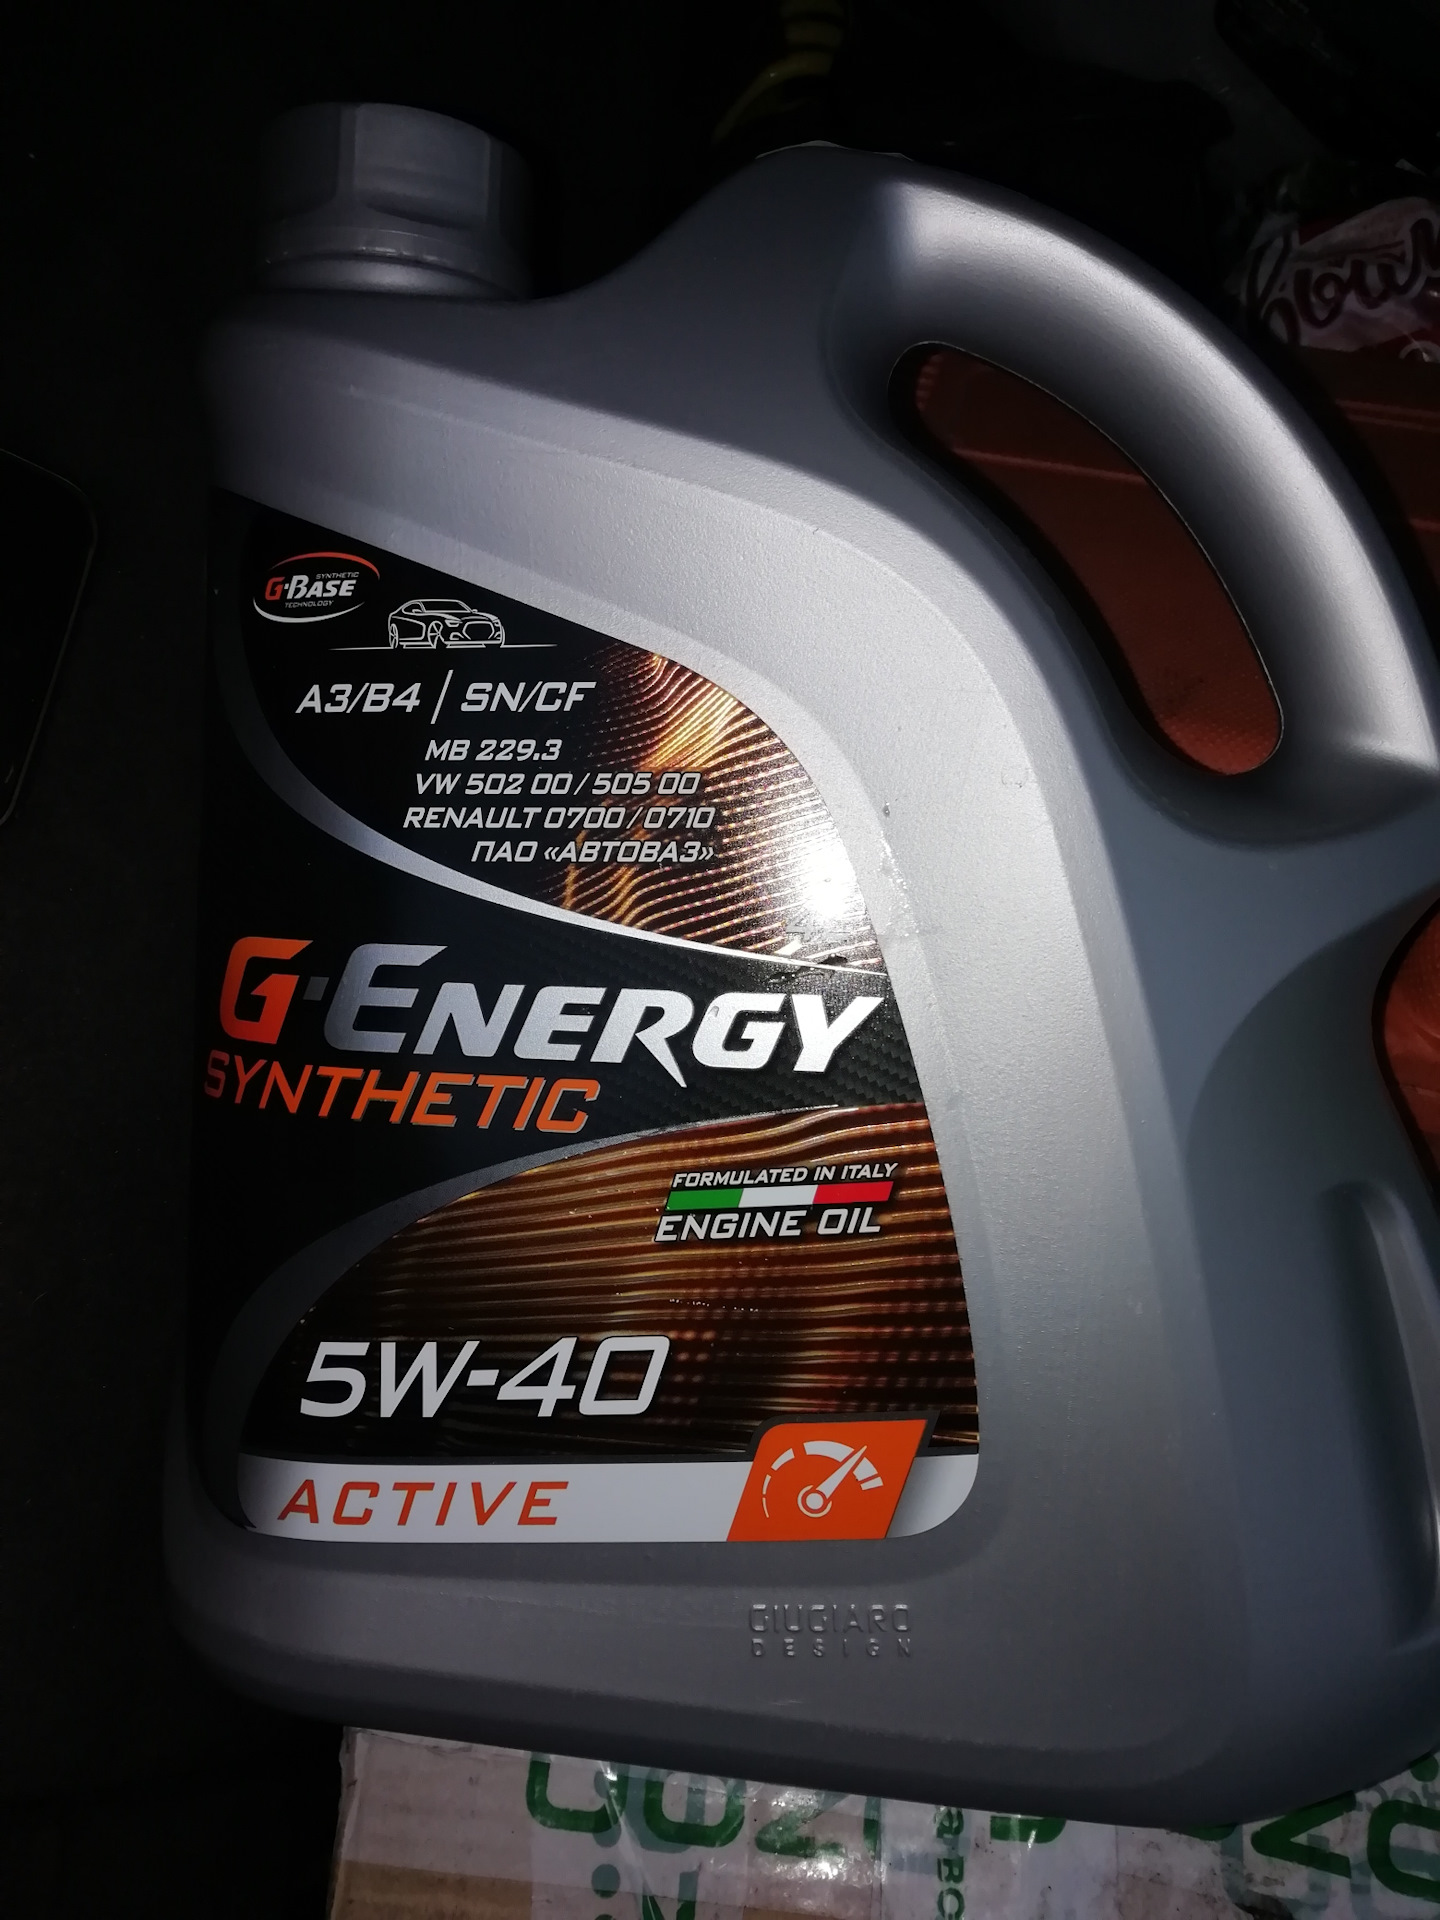 Моторное масло актив. G Energy 5w40 синтетика Active. G Energy Synthetic 5w40. G-Energy Synthetic Active 5w40 4л. Масло g Energy 5w40 синтетика Актив.